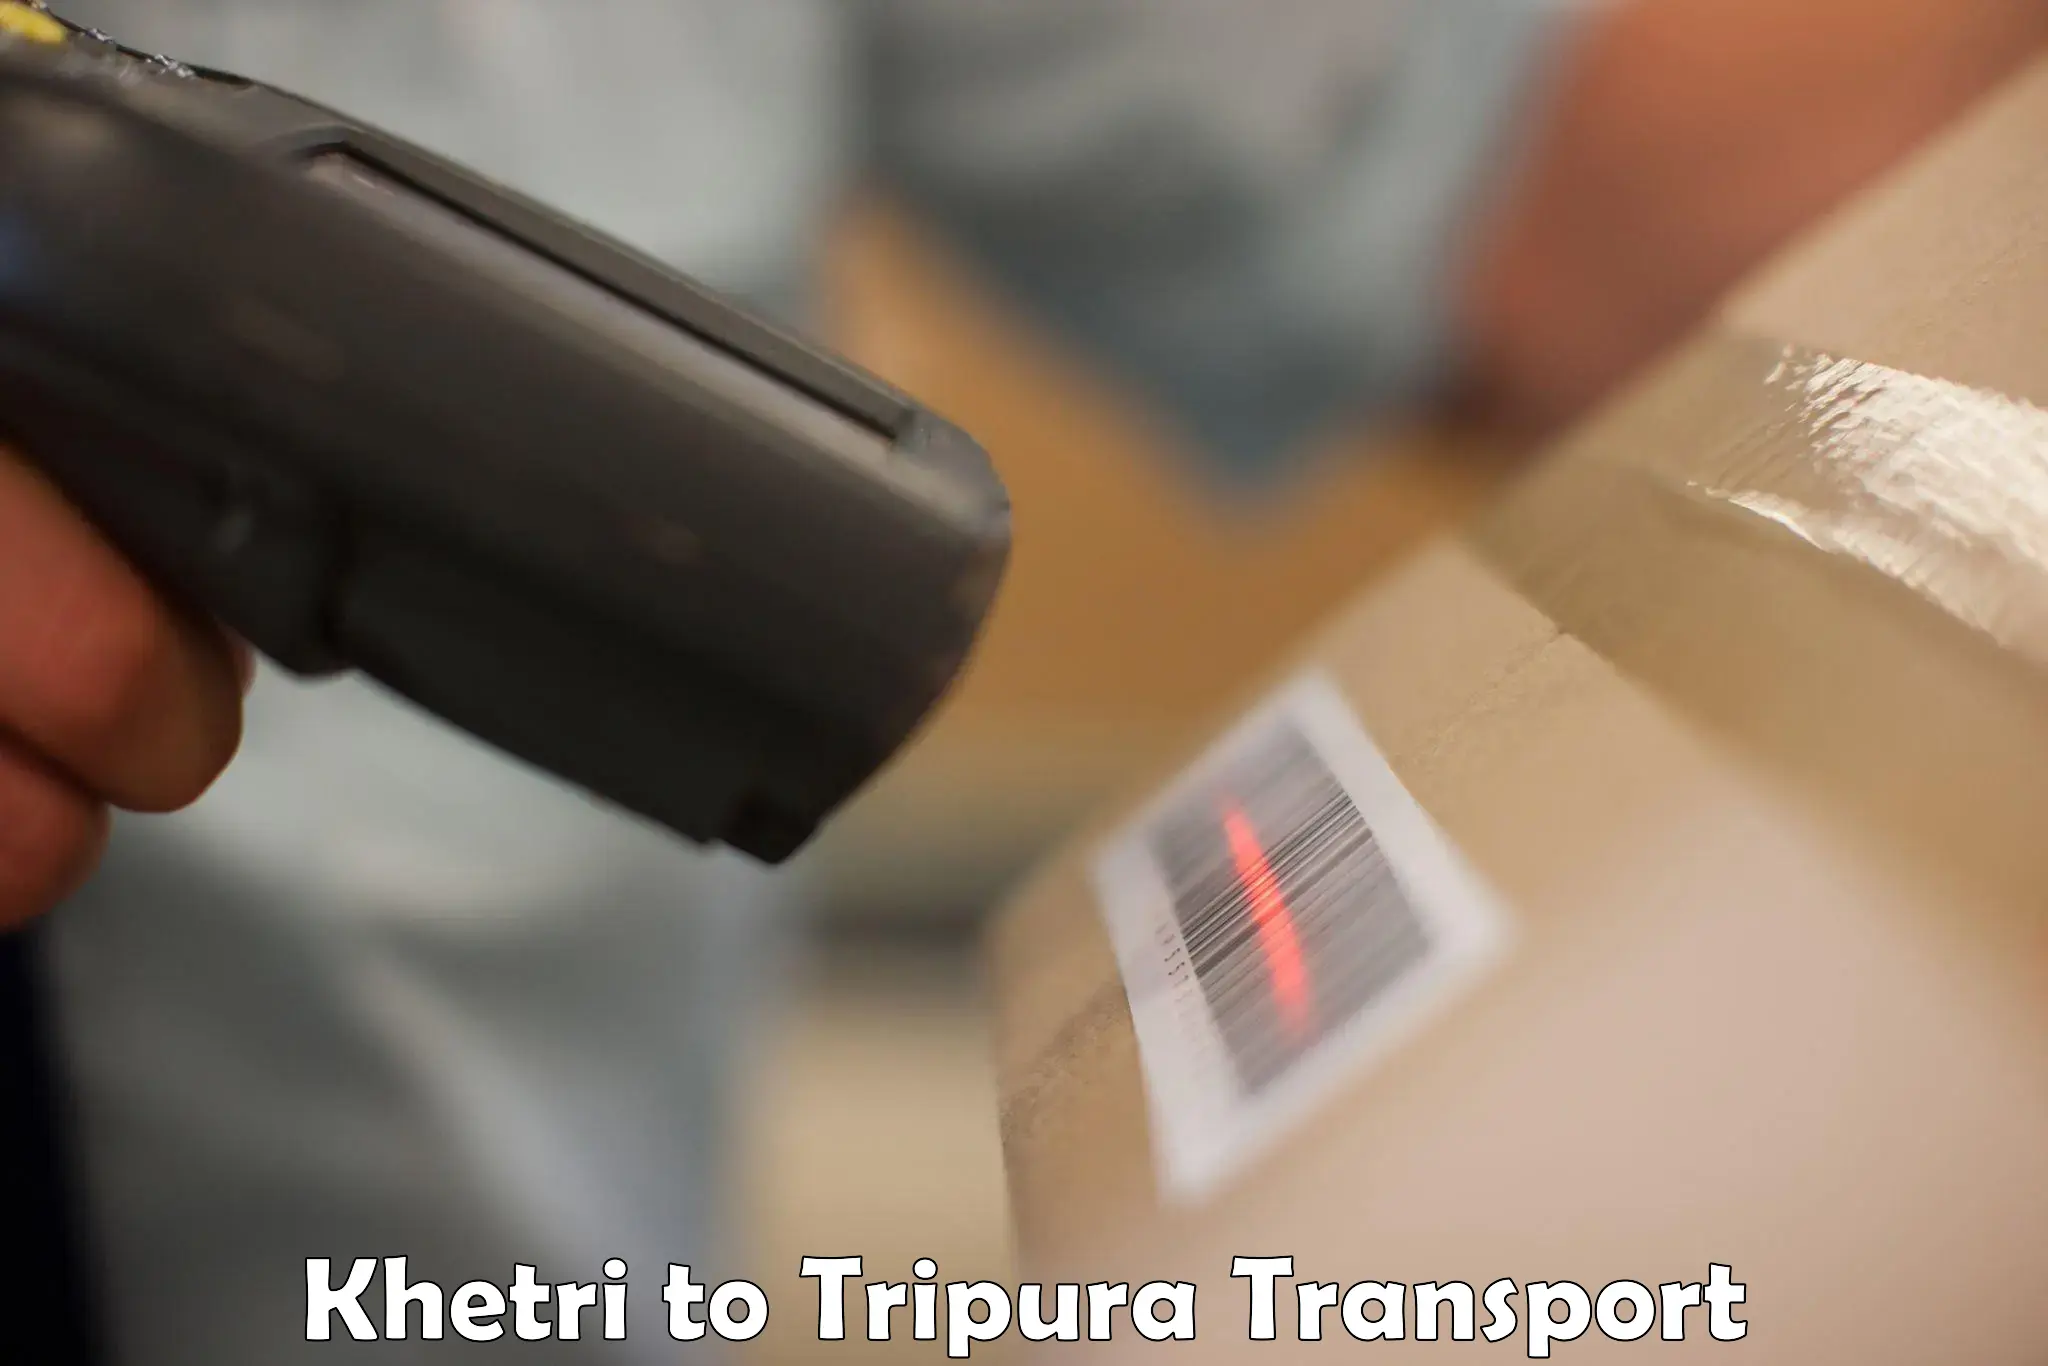 Sending bike to another city Khetri to Tripura